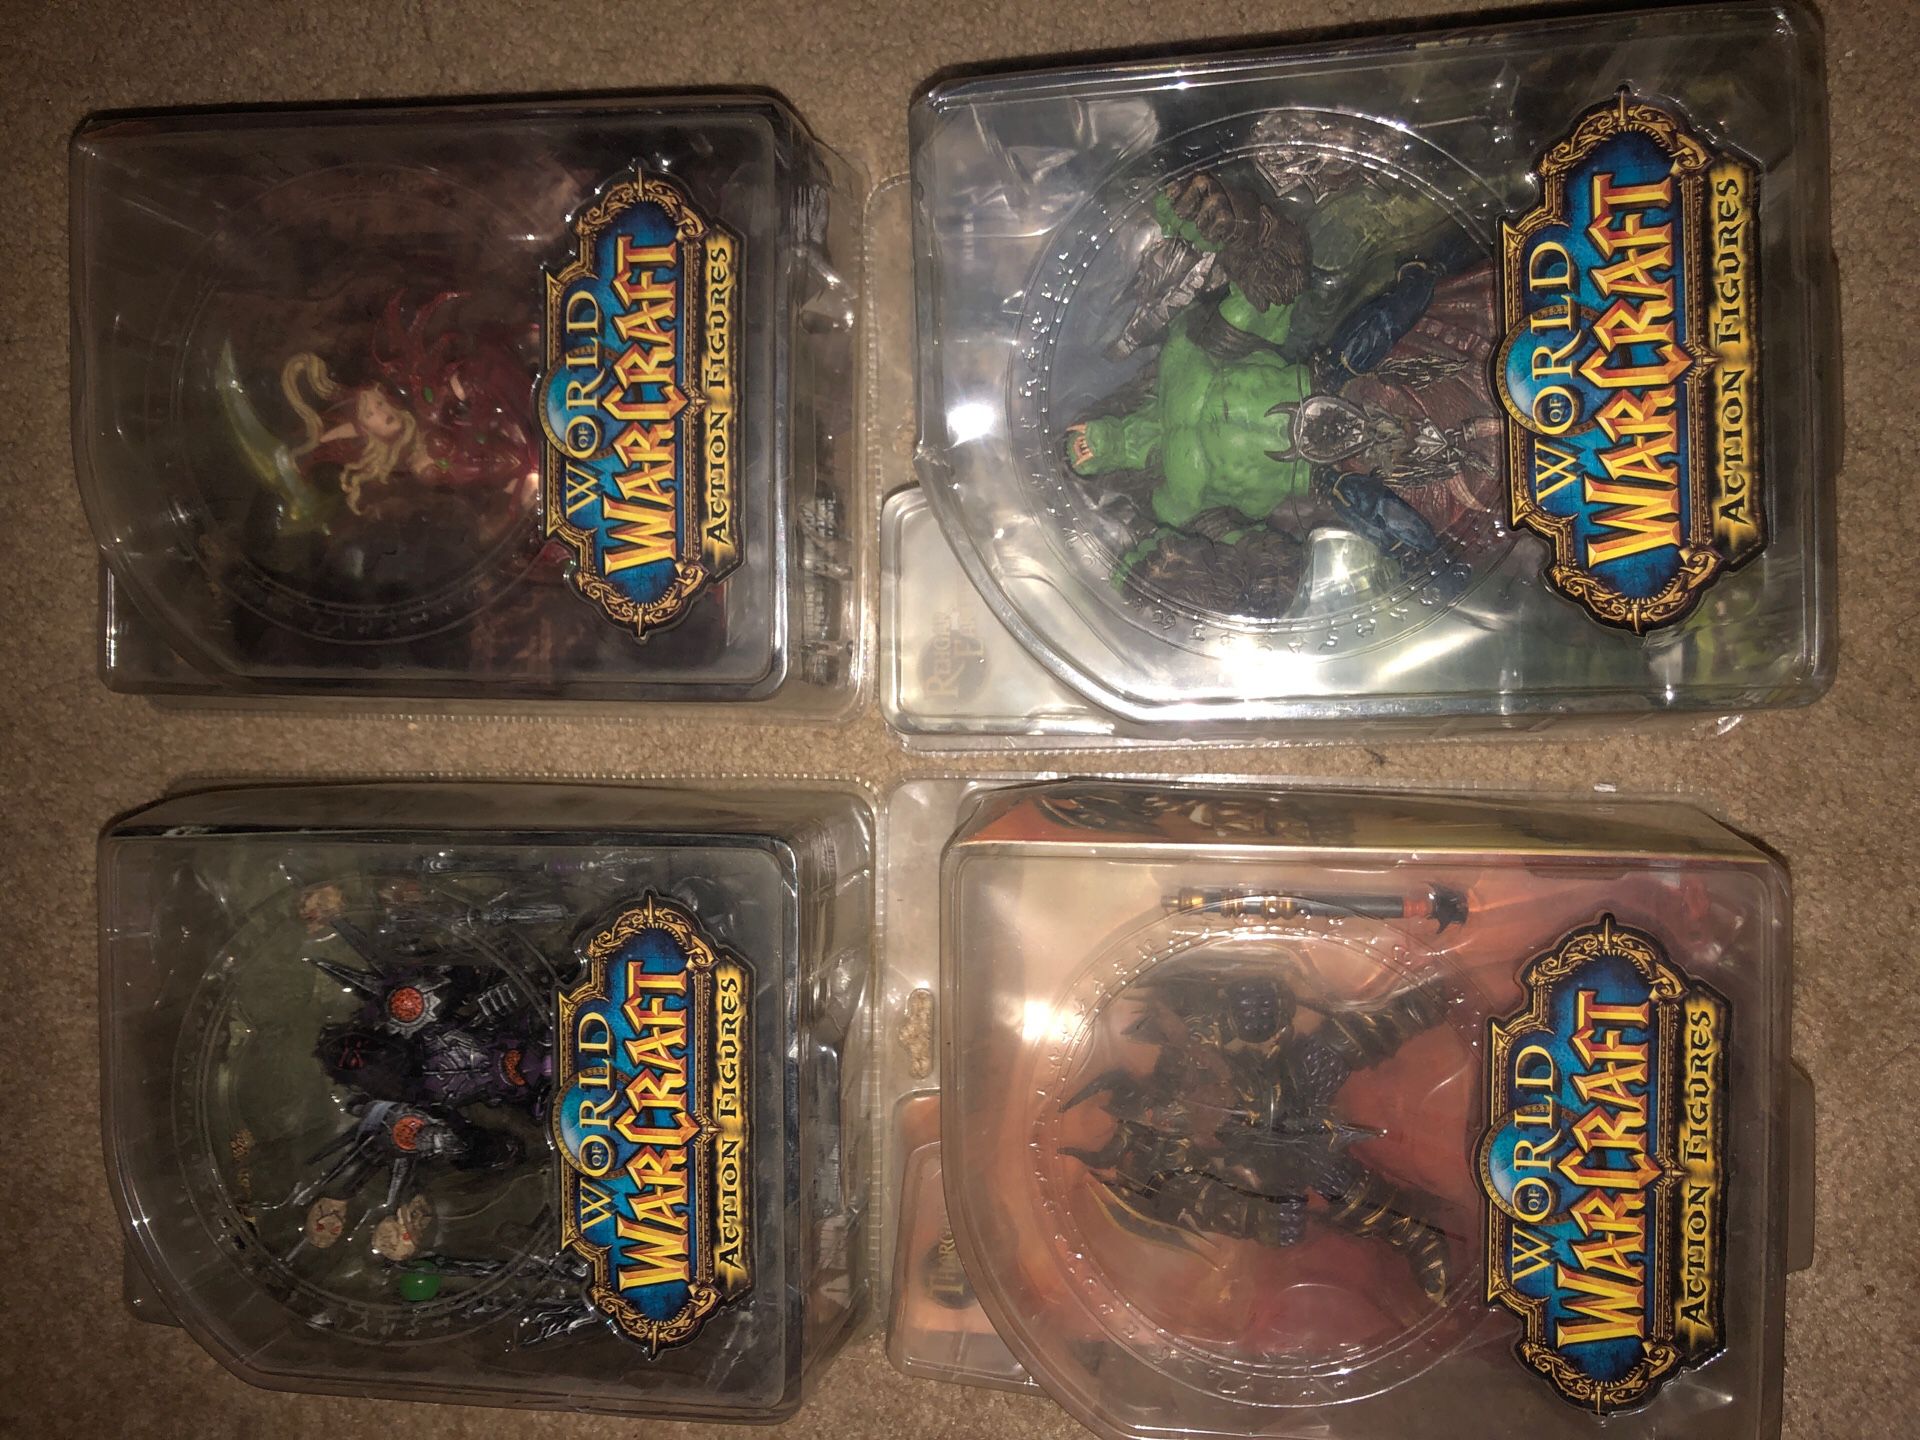 World of Warcraft action figures